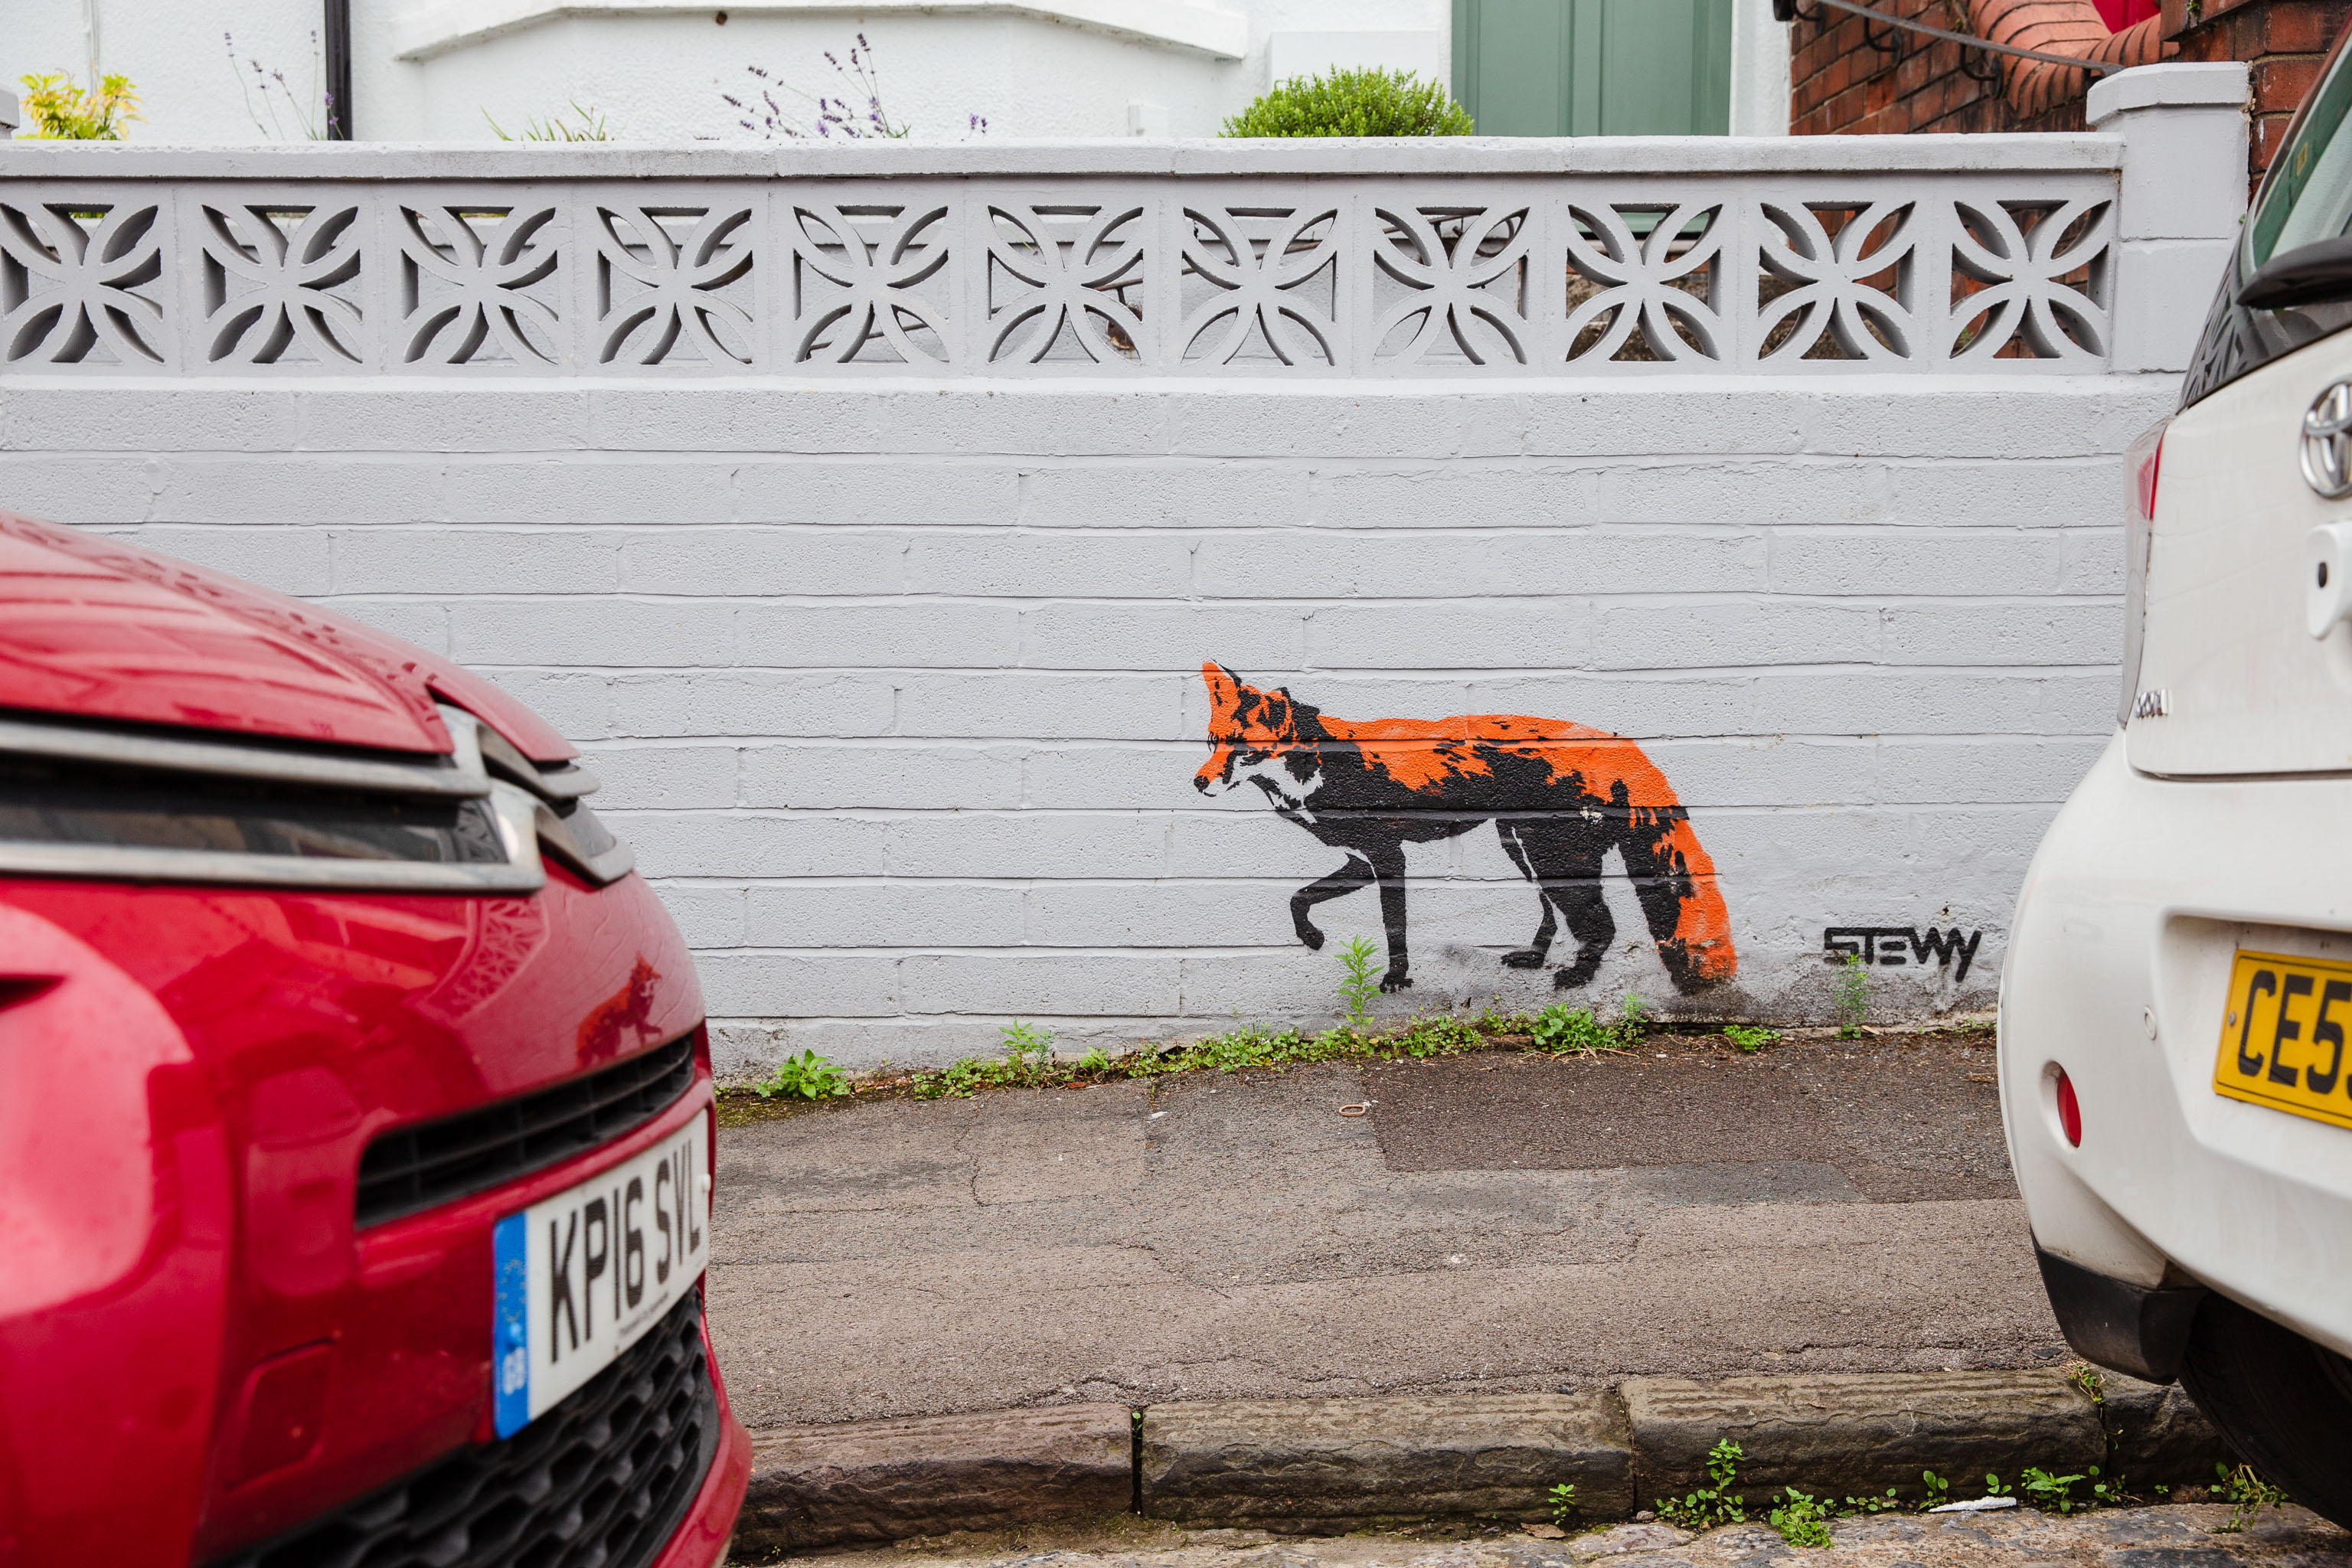 Urban Fox
By Stewy.
